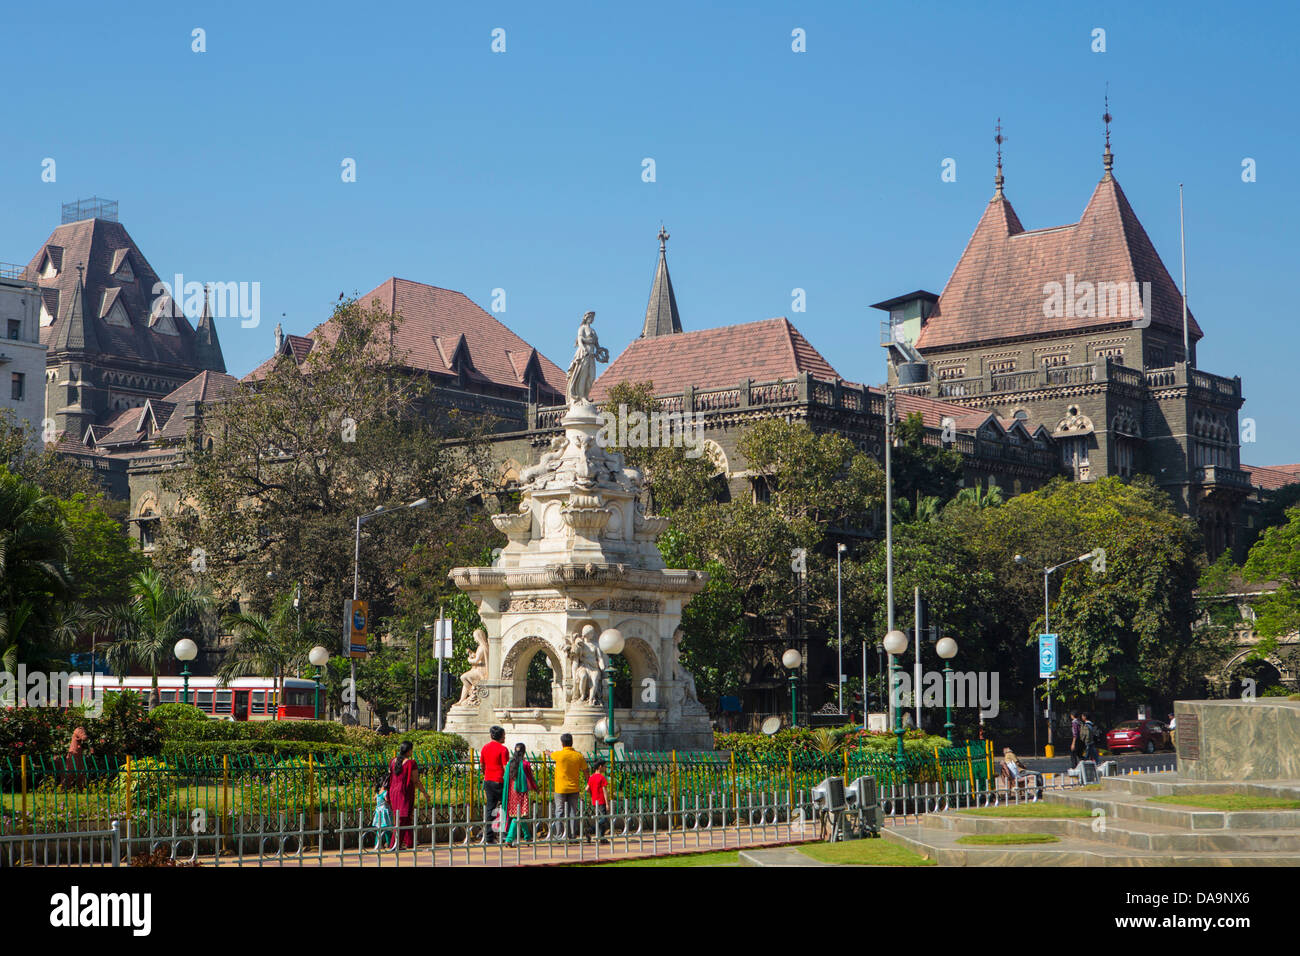 India, South India, Asia, Maharashtra, Mumbai, Bombay, City, Colaba, District, Hutatma Square, Flora Fountain, High Court, Build Stock Photo